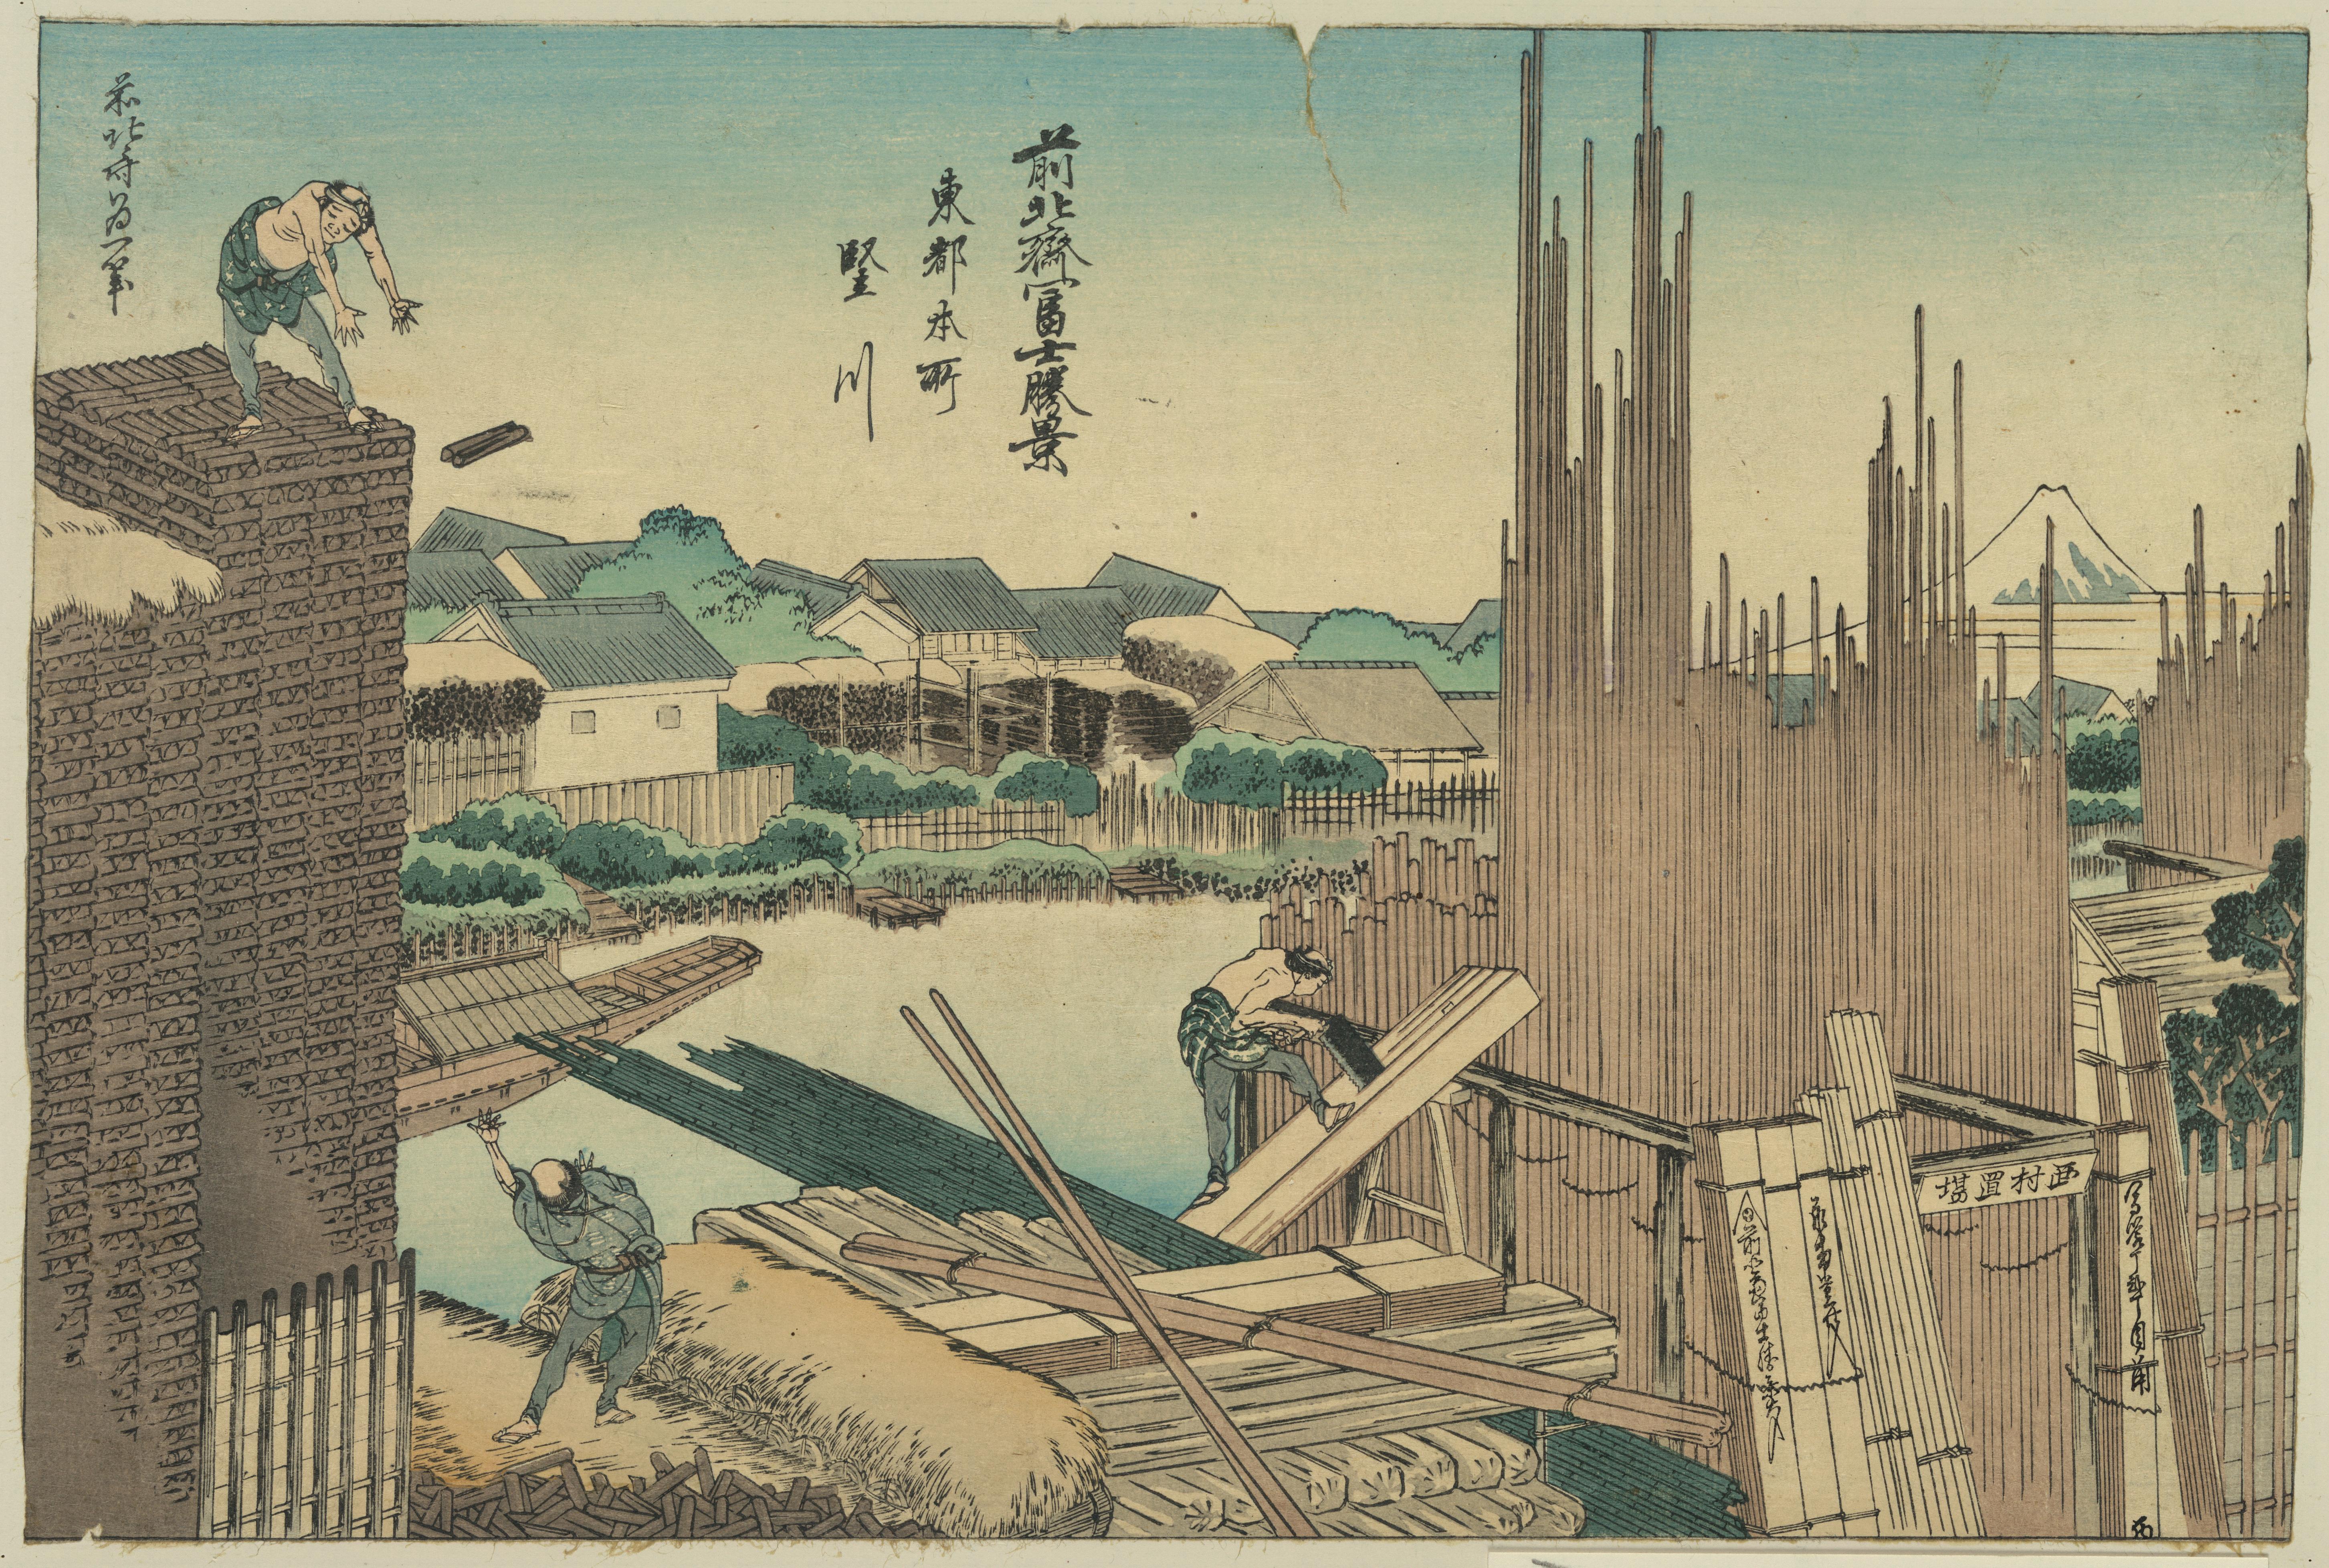 Katsushika Hokusai. Tatekawa in Honjō, from the series Thirty-six Views of Mount Fuji